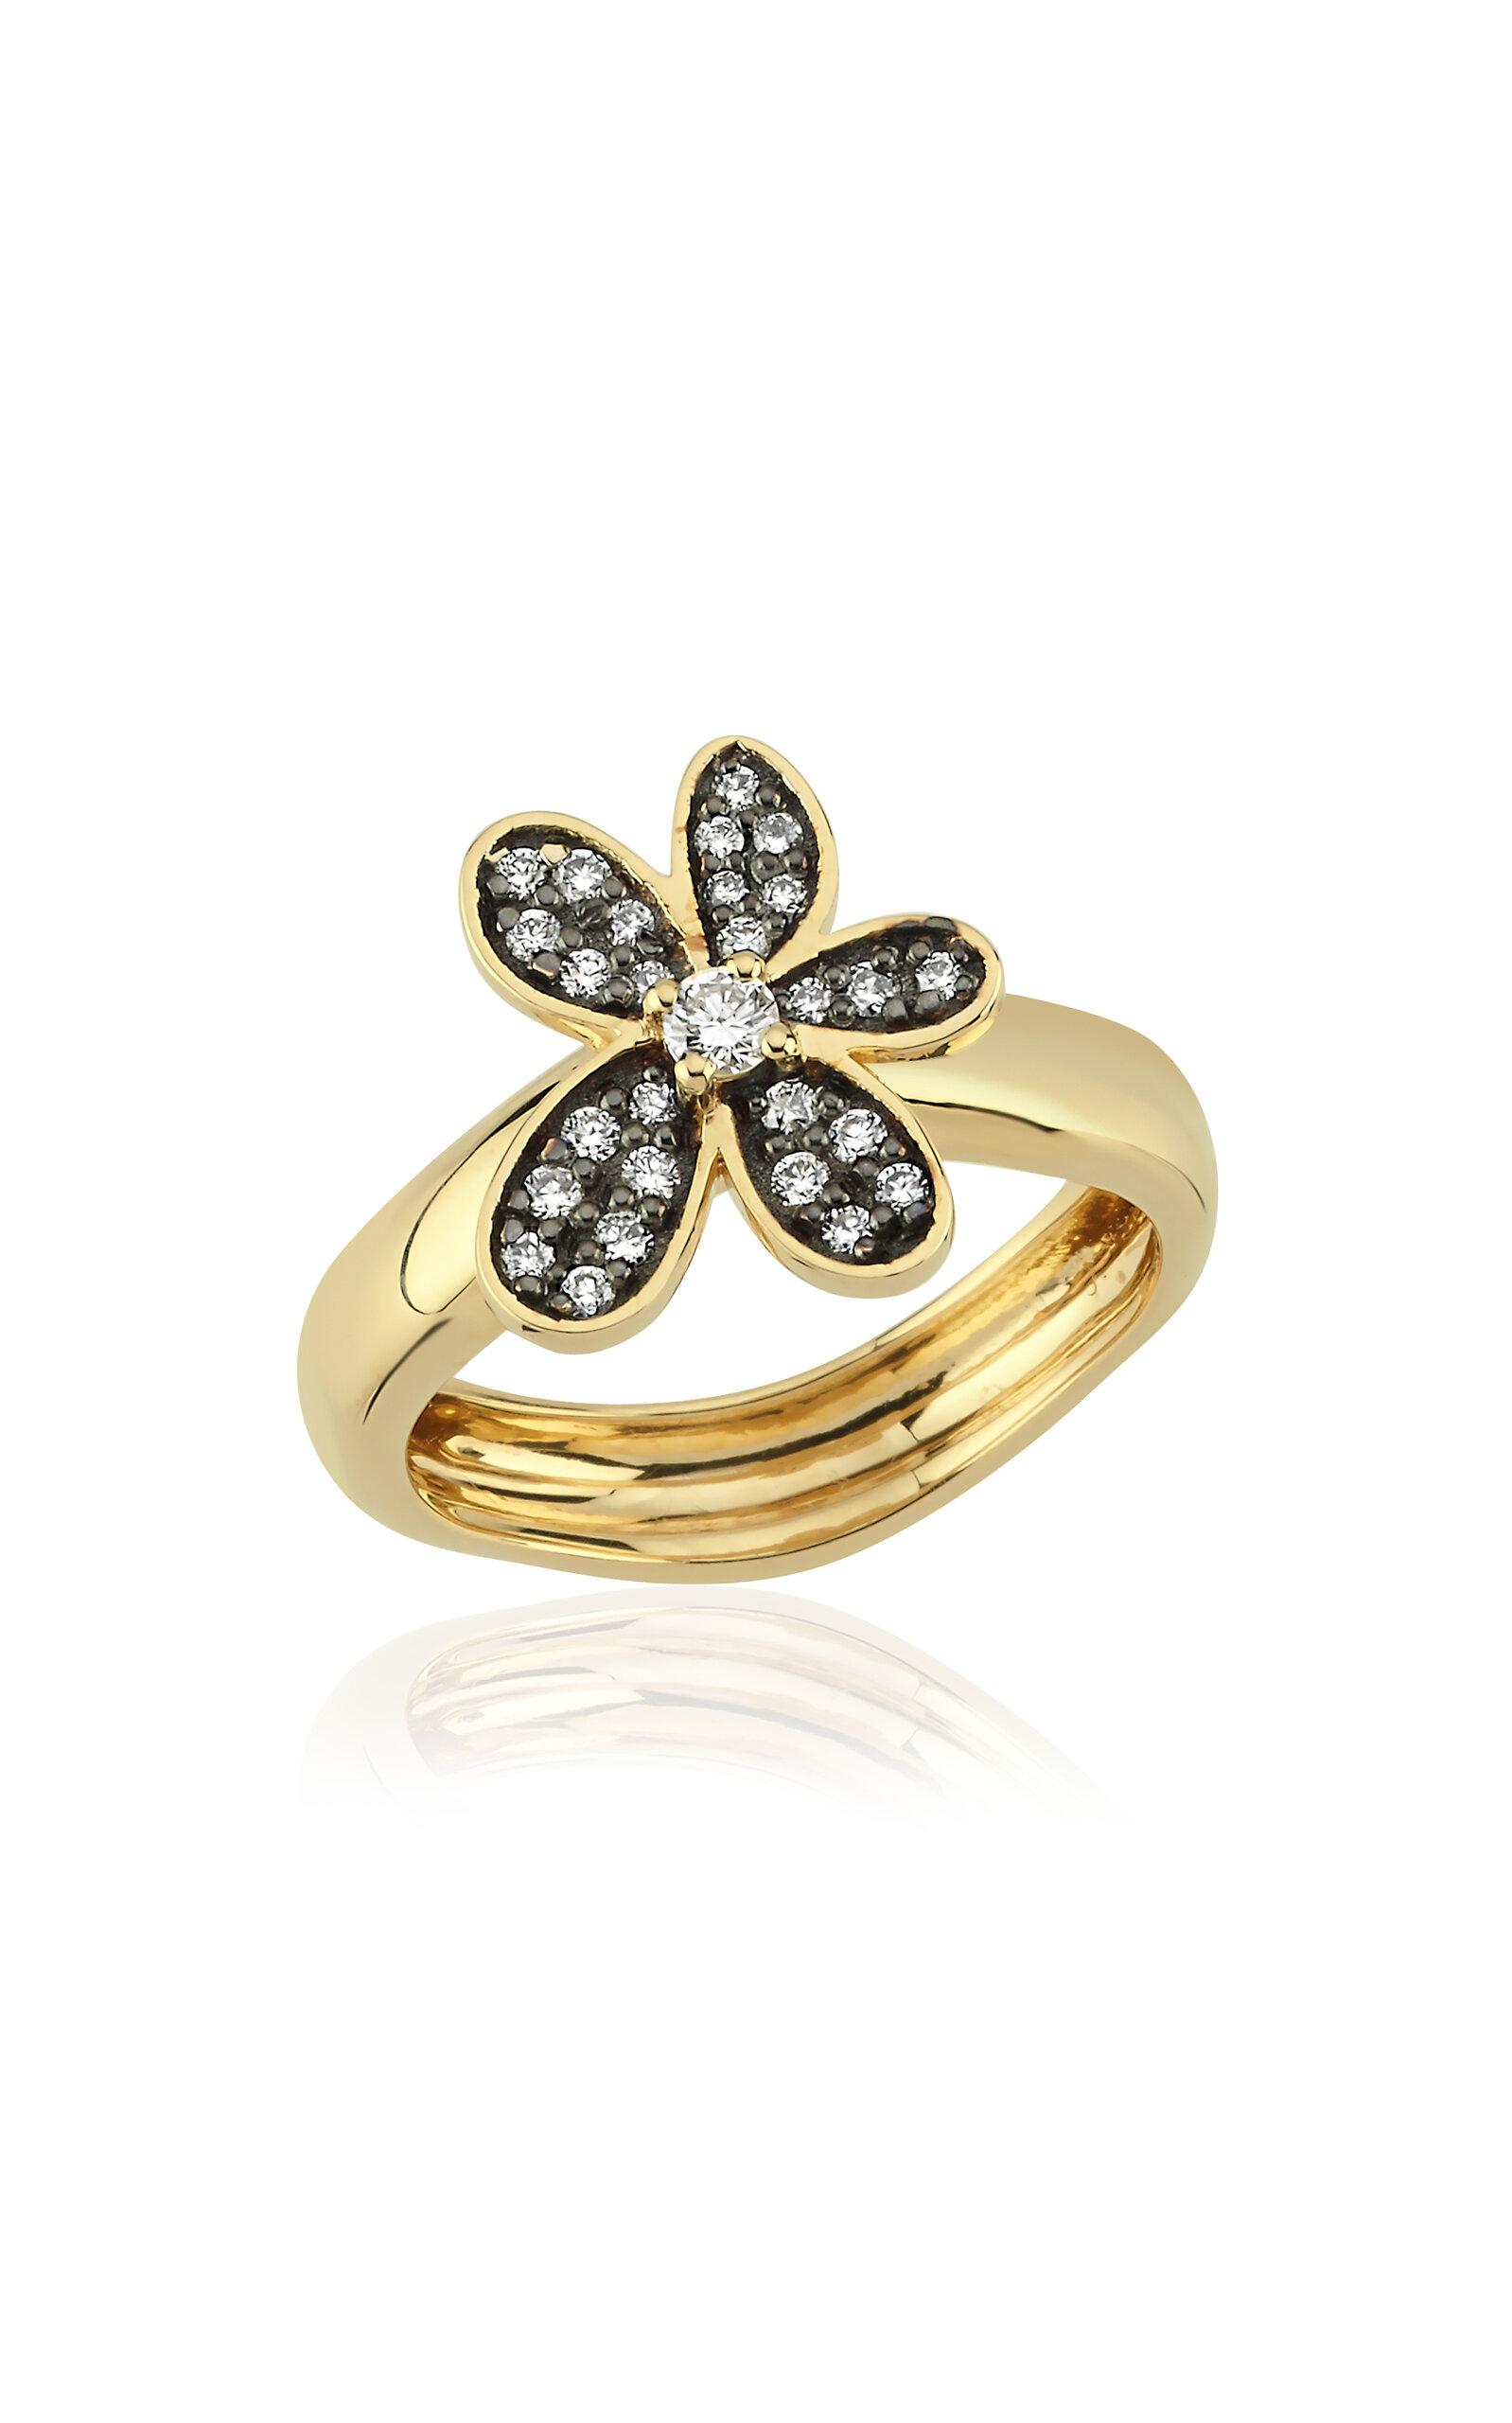 Charms Company Women's Rebellion 14K Yellow Gold Diamond Ring